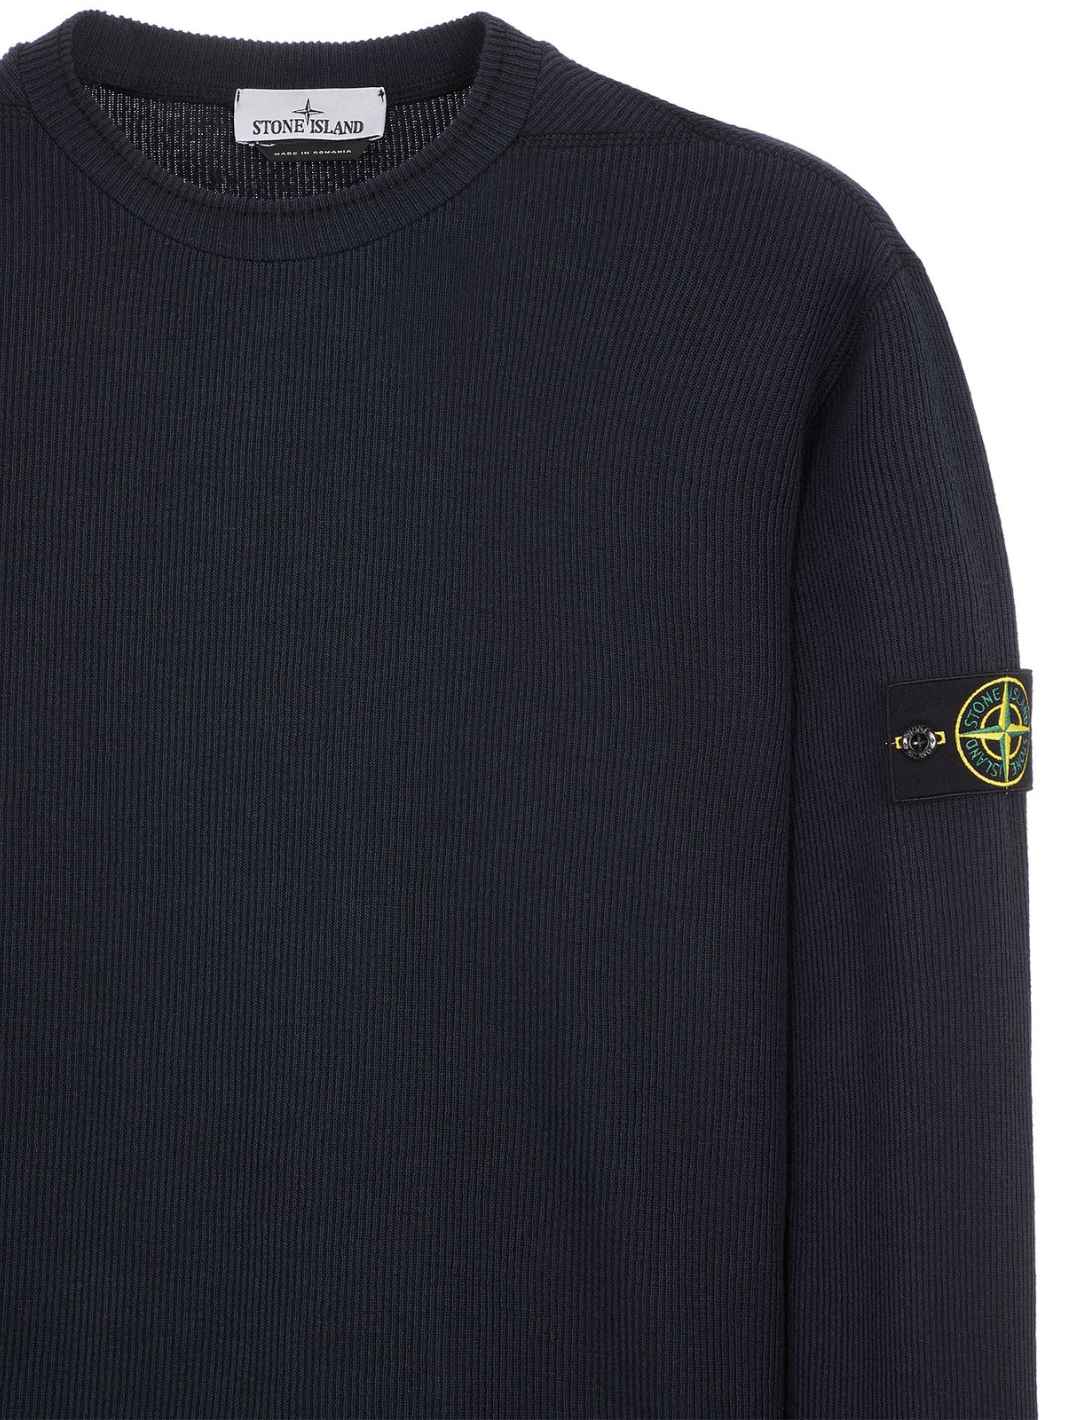 Stone Island Sweaters Genser | Ribbed Sweatshirt Navy